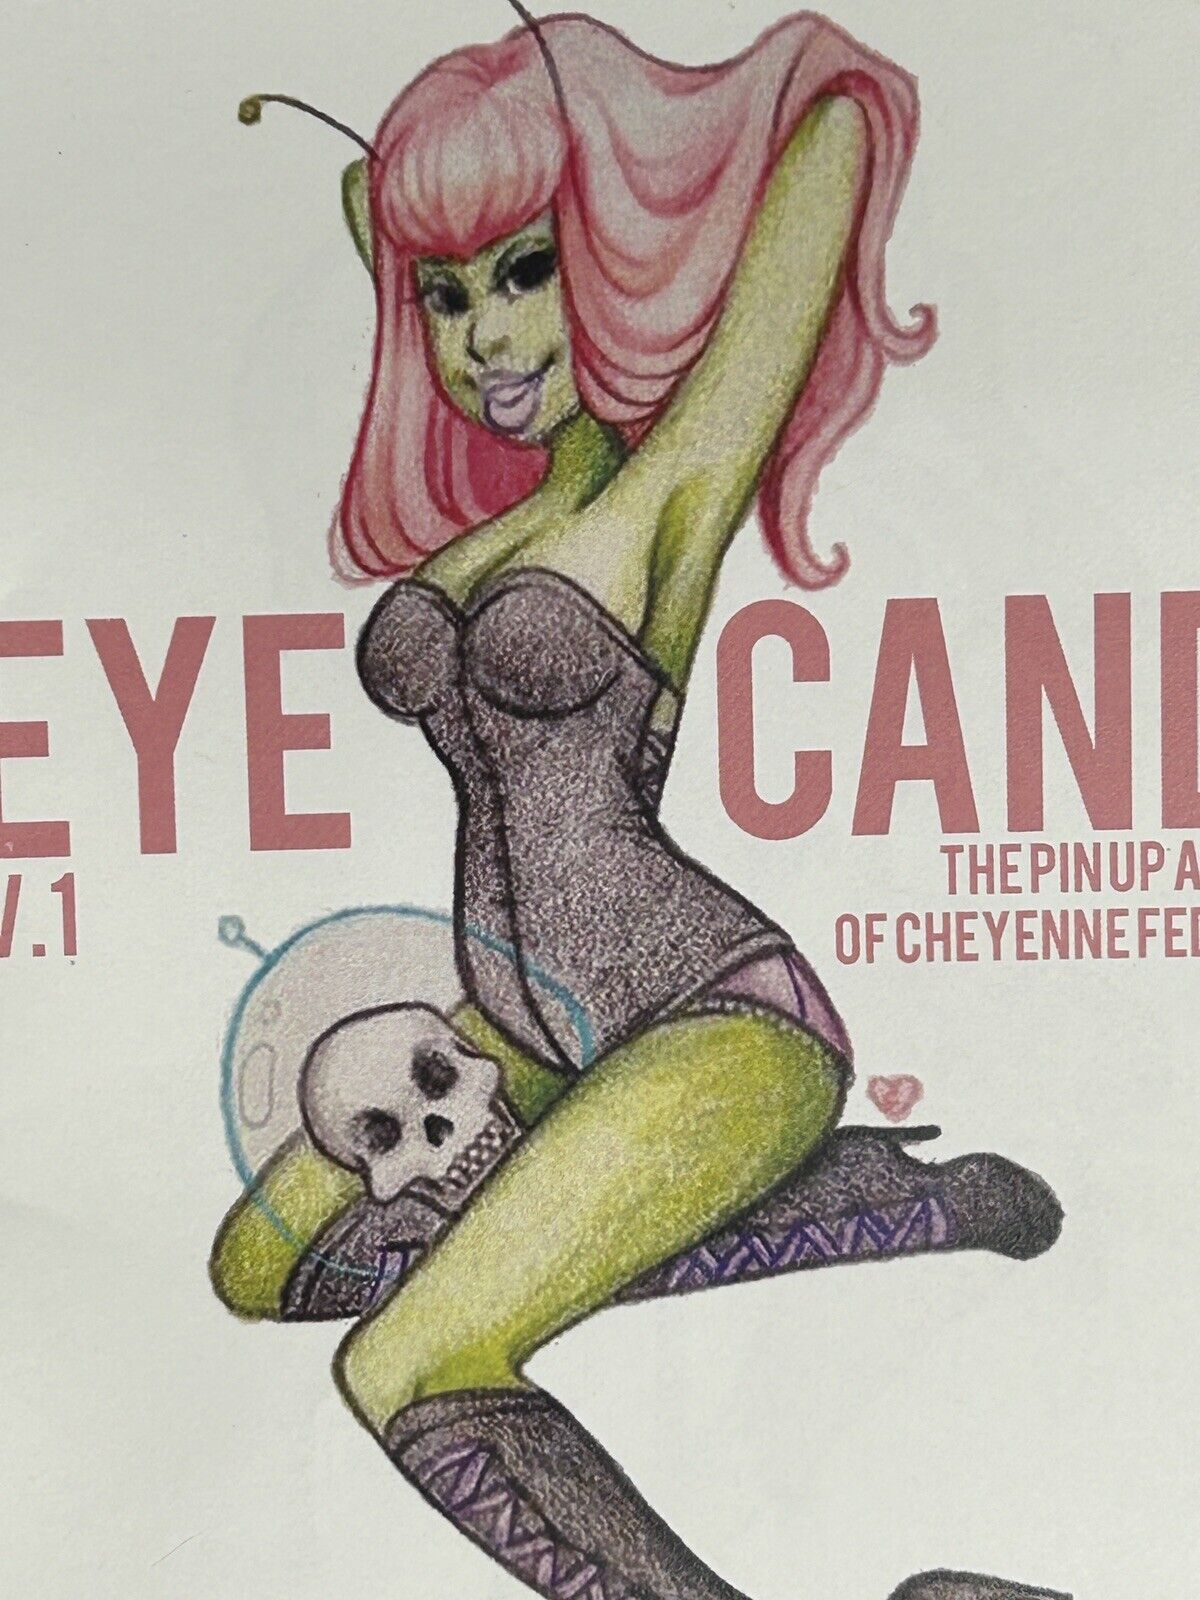 Eye Candy V1 The Pinup Artwork Of Cheyenne Federiconi Hand-stitched